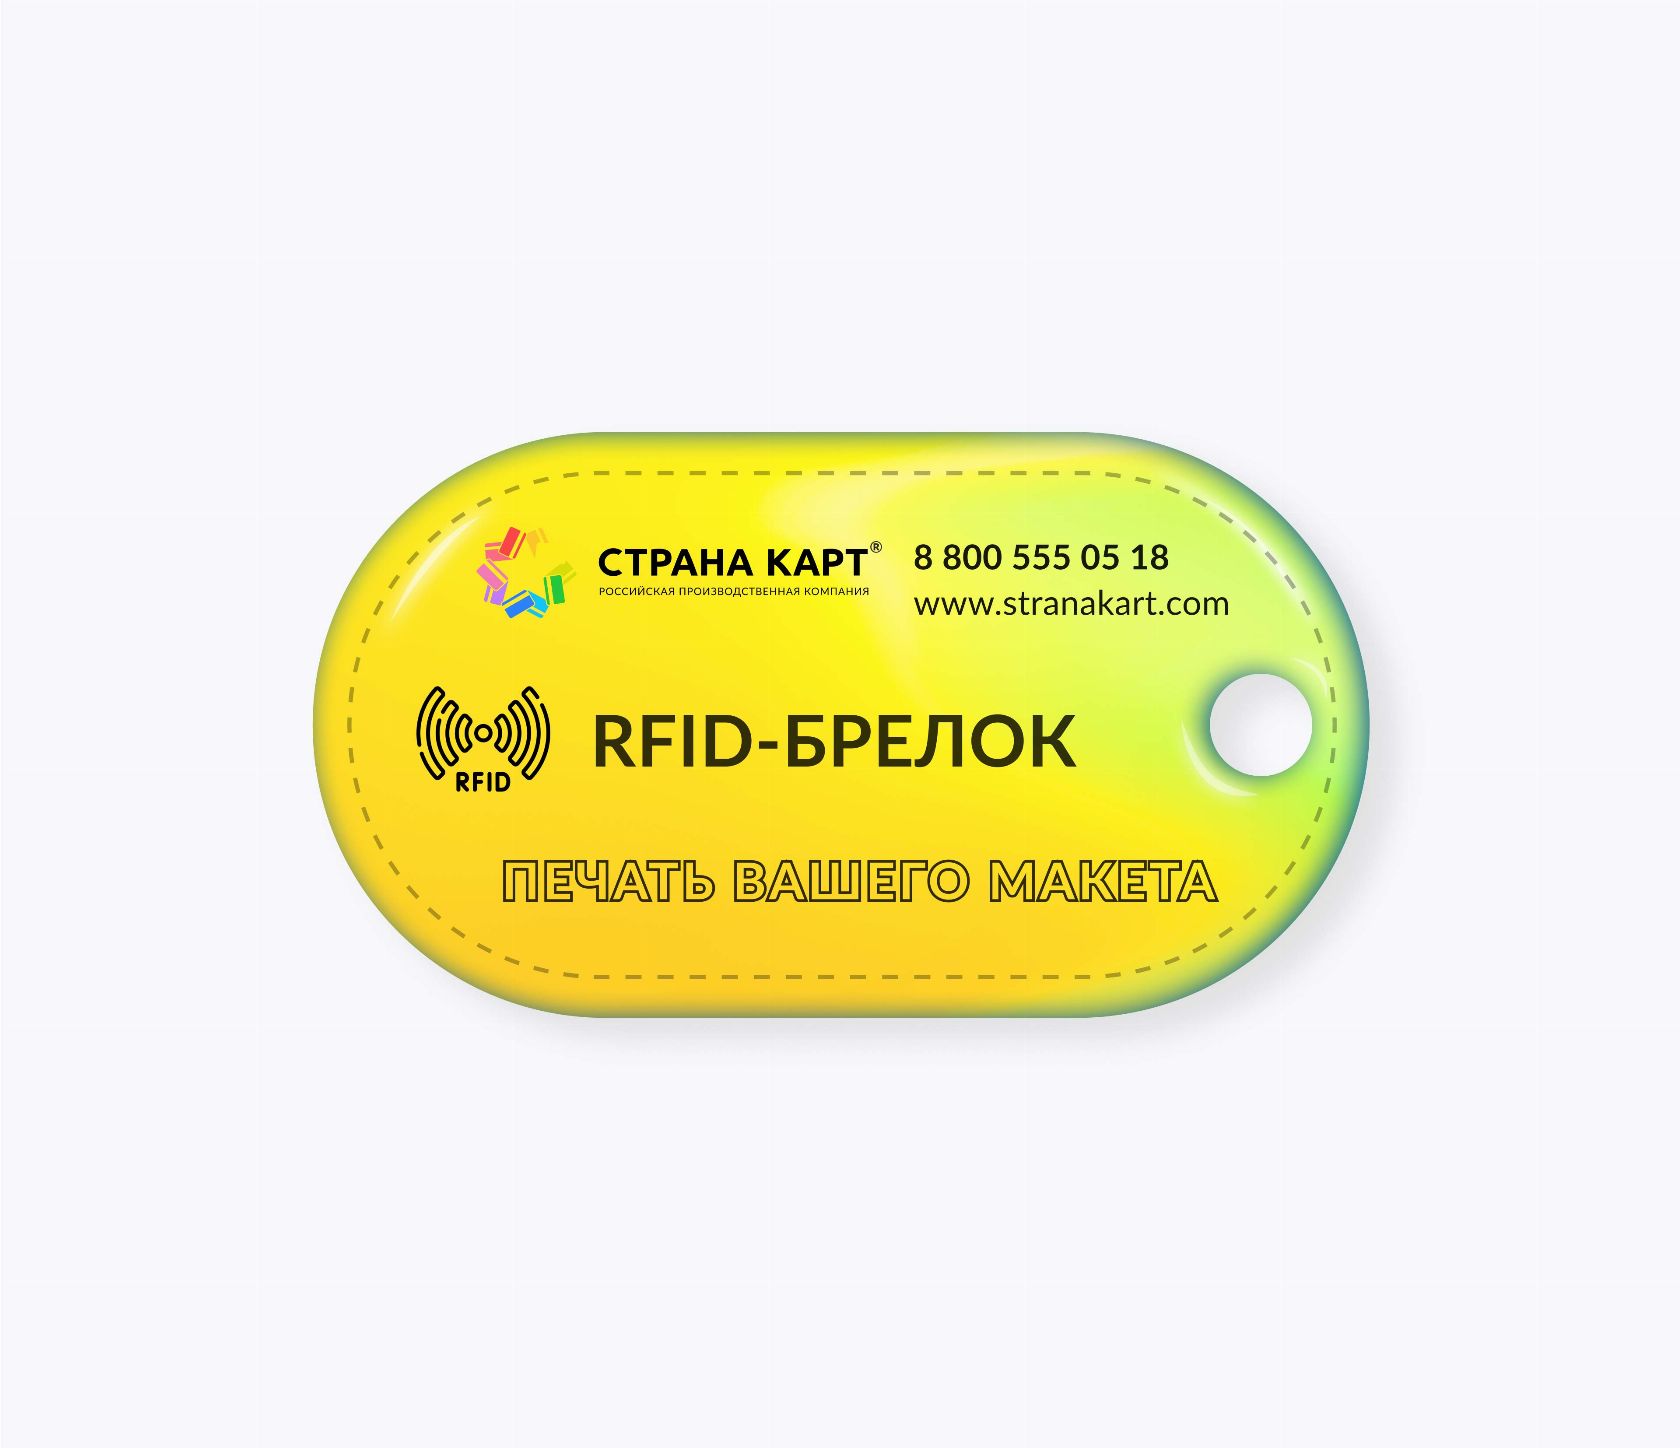 Овальные RFID-брелоки NEOKEY® с чипом MIK1KMCM 4 byte nUID RFID-брелоки NEOKEY® с чипом MIK1KMCM 4 byte nUID